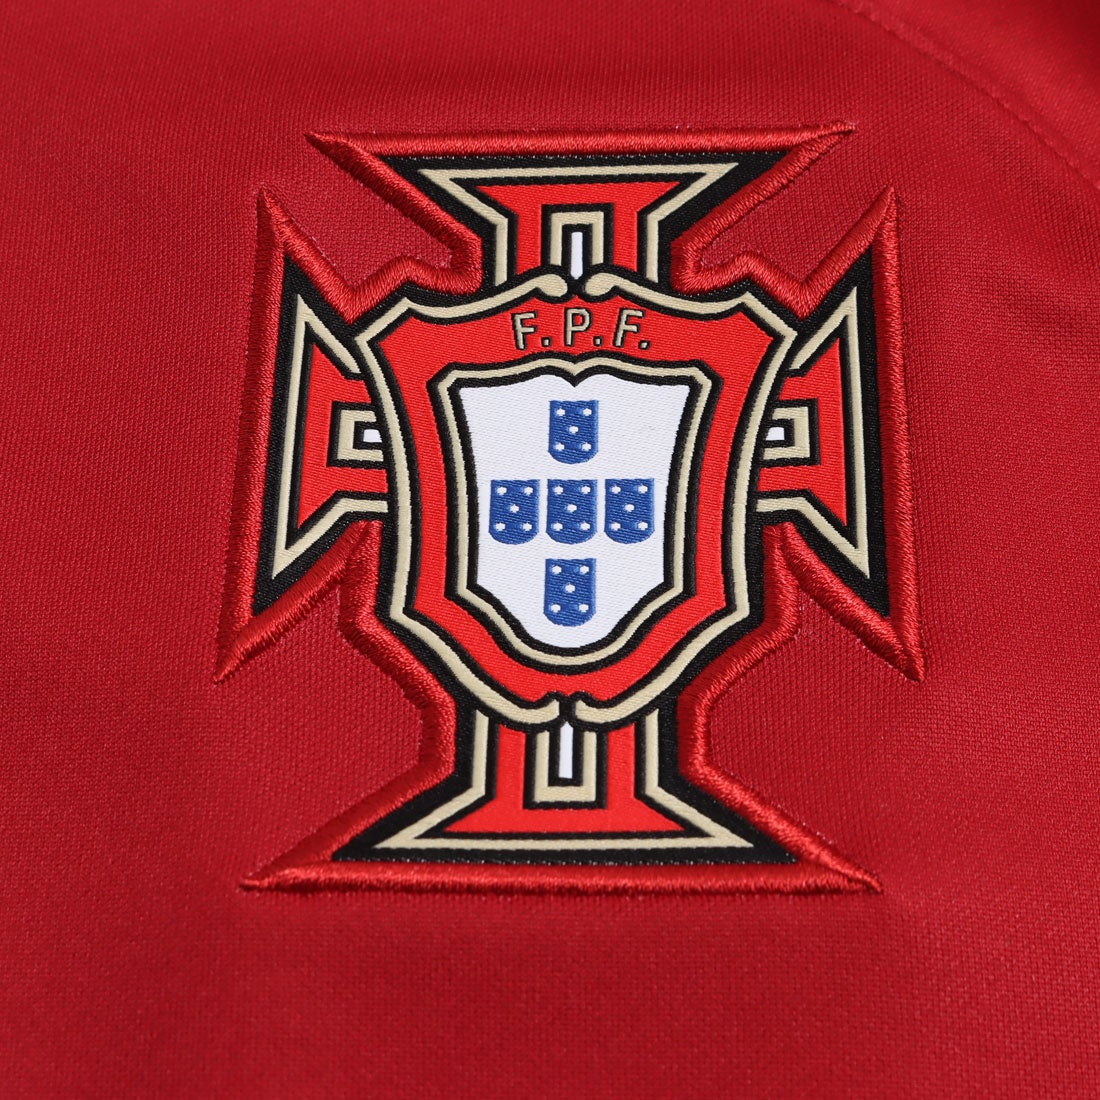 NIKE ポルトガル代表 2022 ユニフォーム ホーム 半袖 レプリカ DN0692 628 代表・クラブユニフォーム -サッカーショップ【SWS】